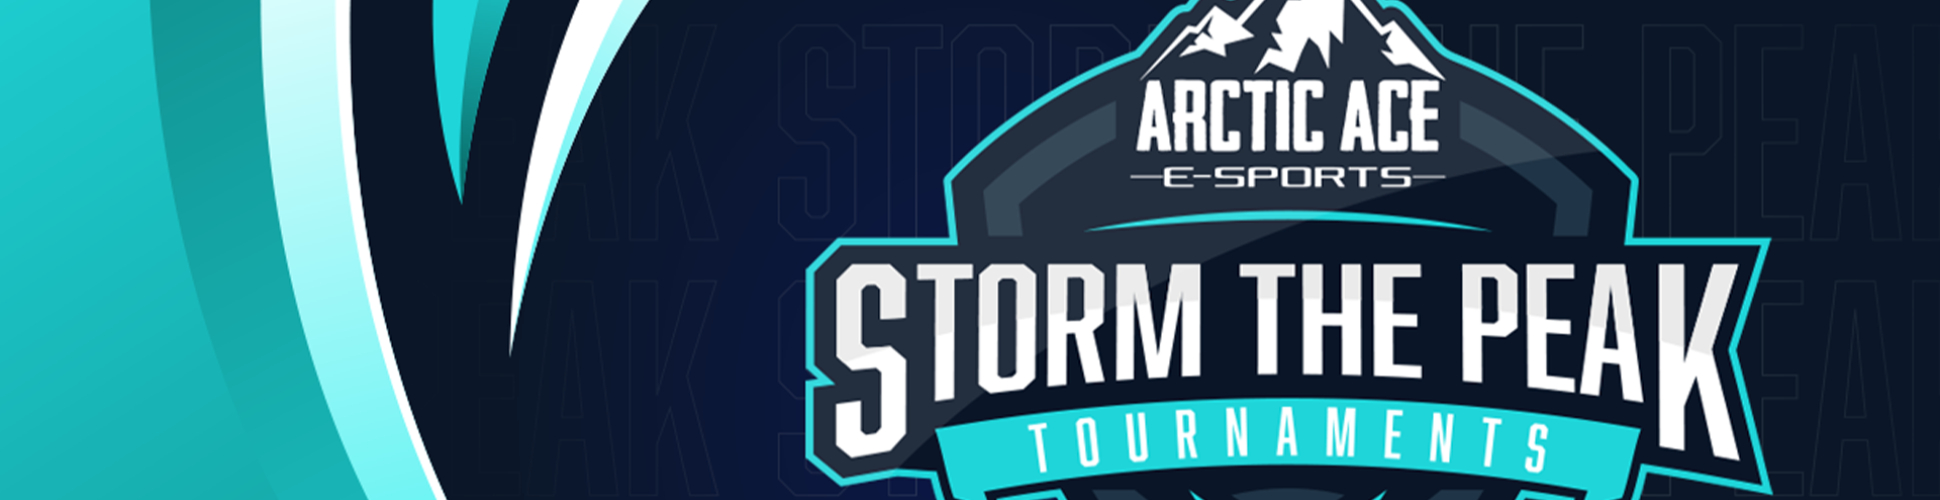 Storm the Peak - Apex Tournament Series (Diamond Capped)